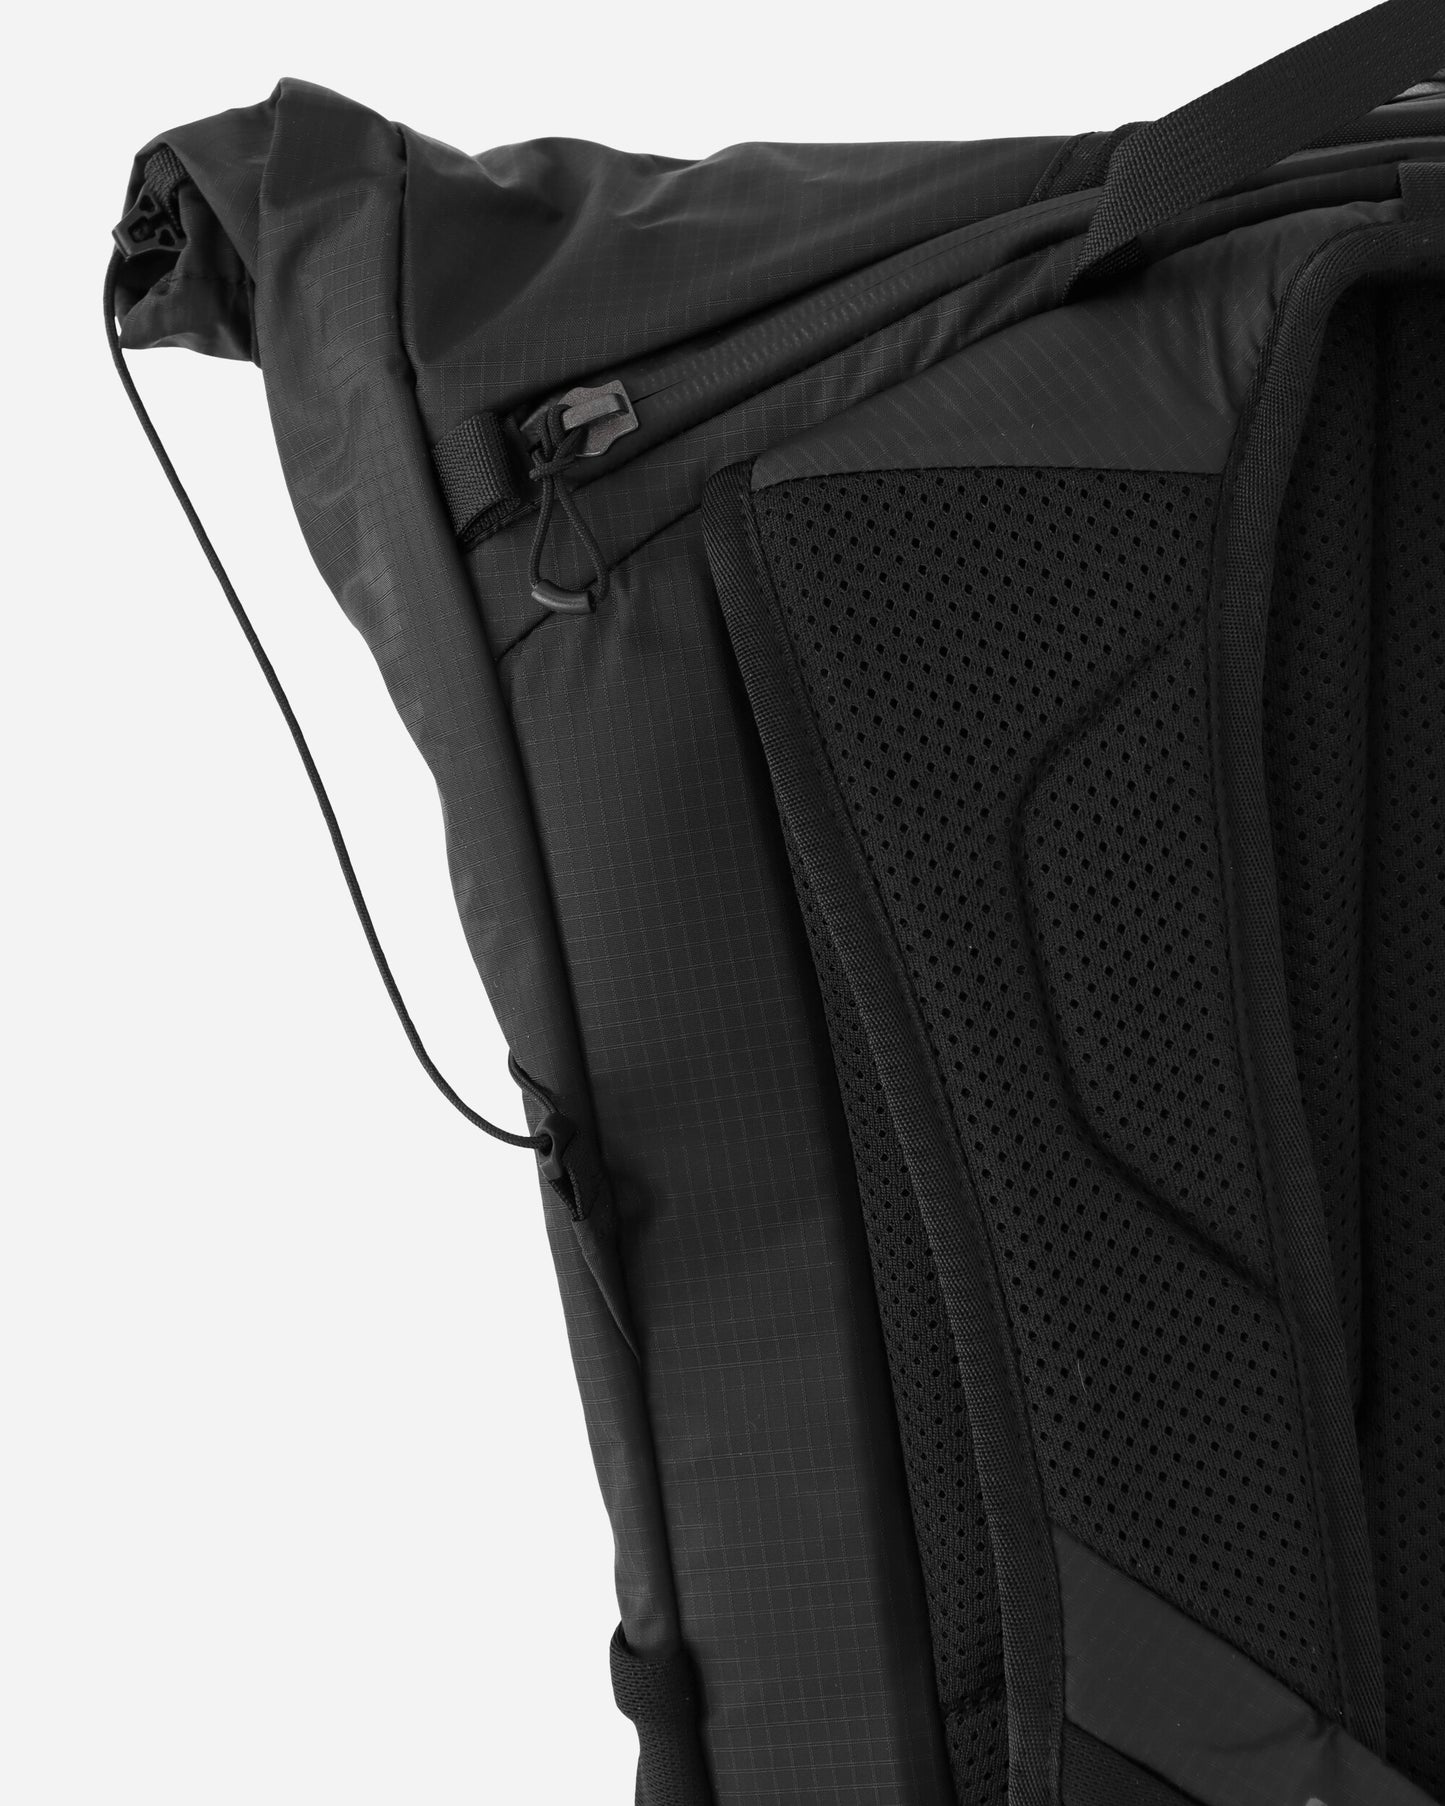 Salomon Acs Daypack 20 Black Bags and Backpacks Backpacks LC2251900